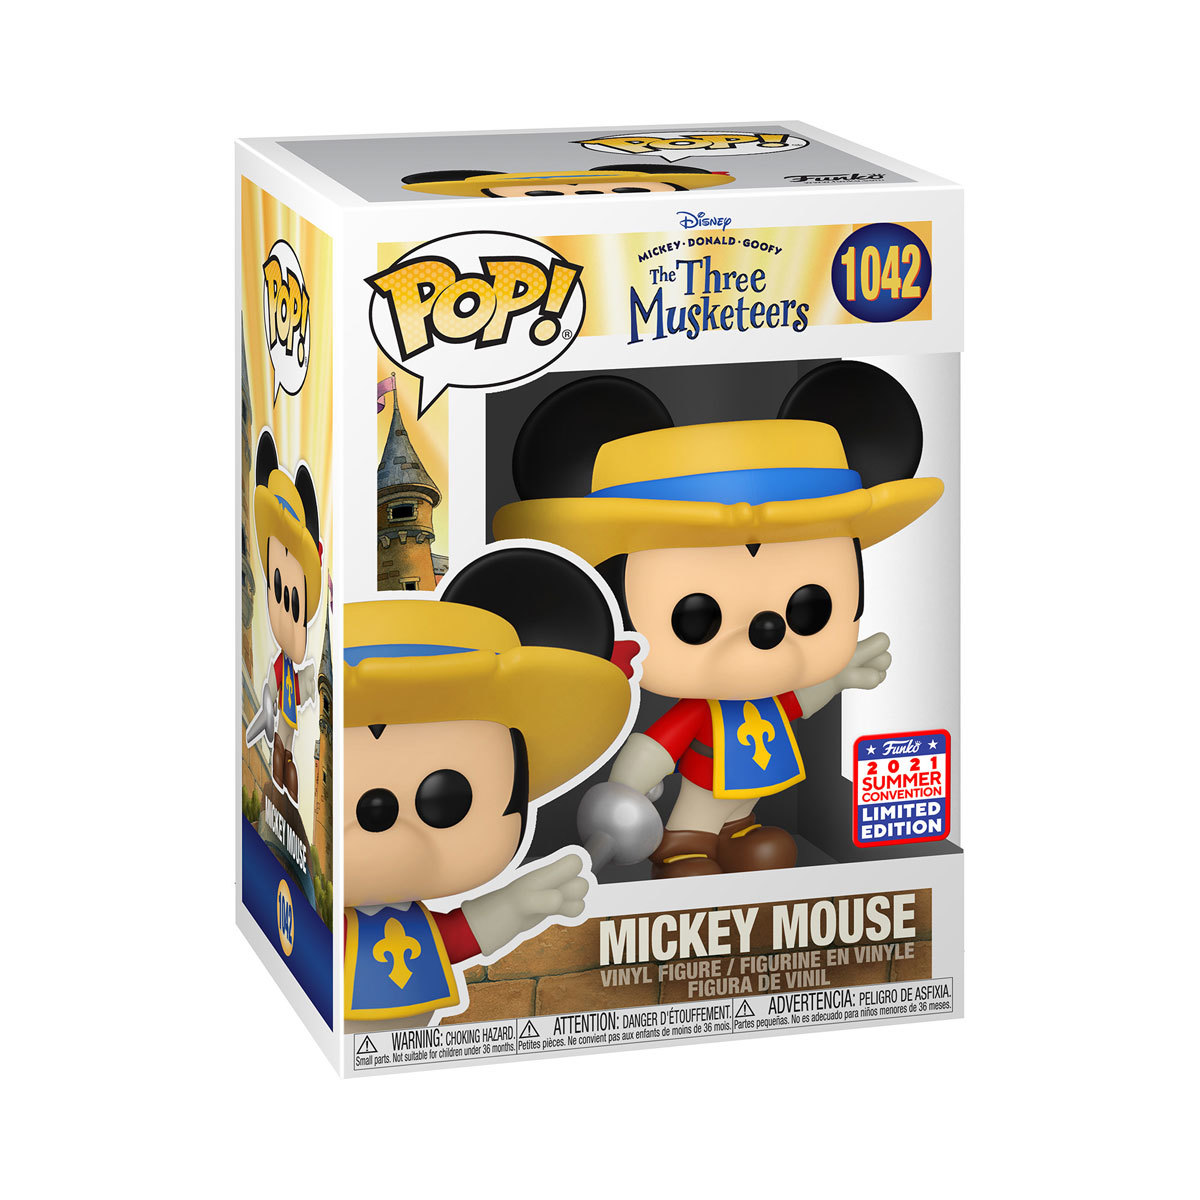 Funko Pop! Disney The Three Musketeers - Mickey Mouse Vinyl Figure